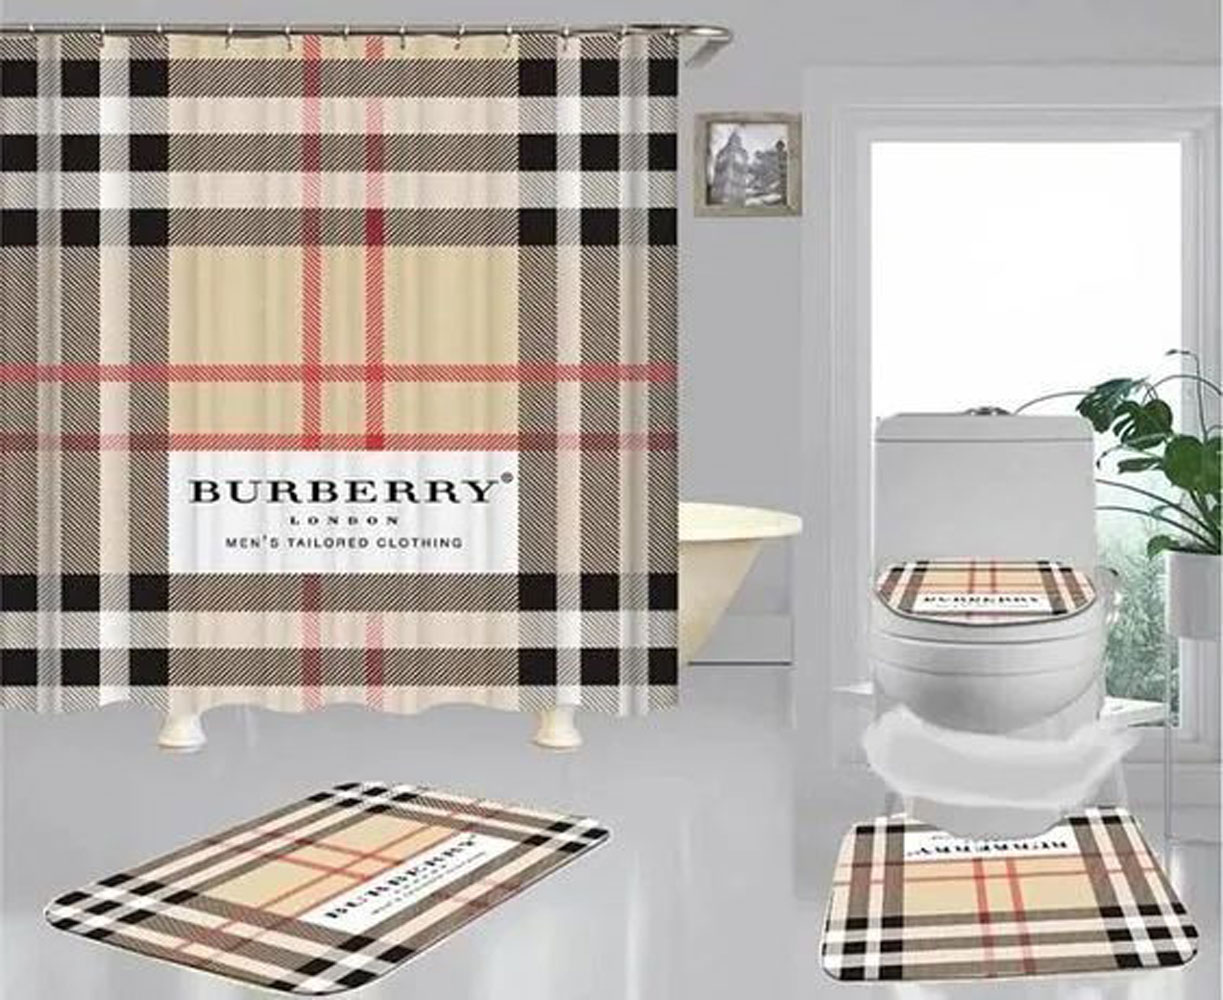 Burberry London Bathroom Set Hypebeast Bath Mat Home Decor Luxury Fashion Brand